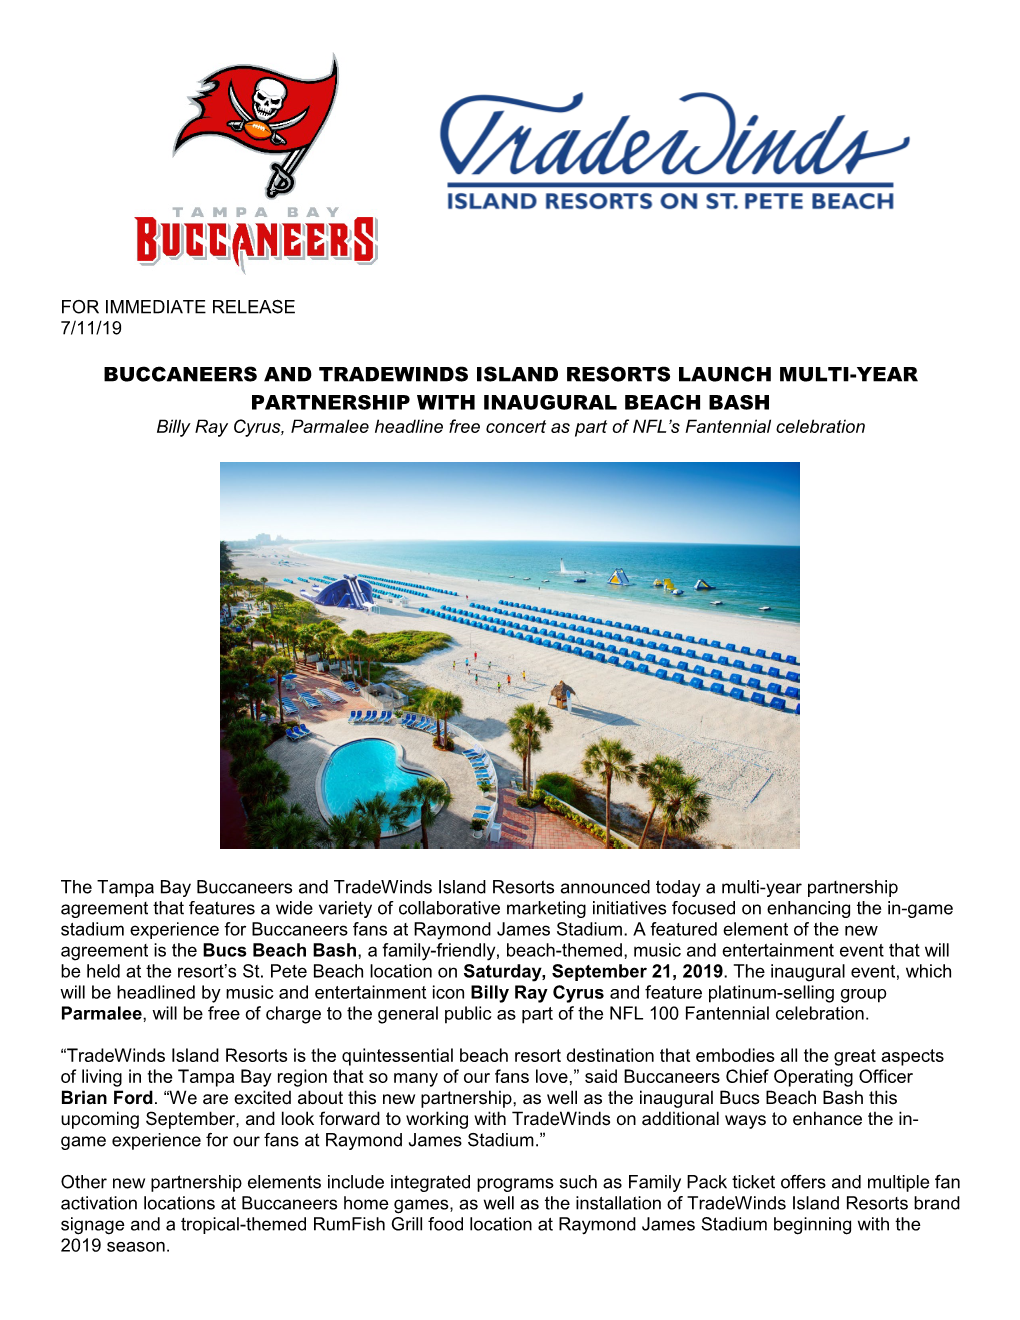 Buccaneers and Tradewinds Island Resorts Launch